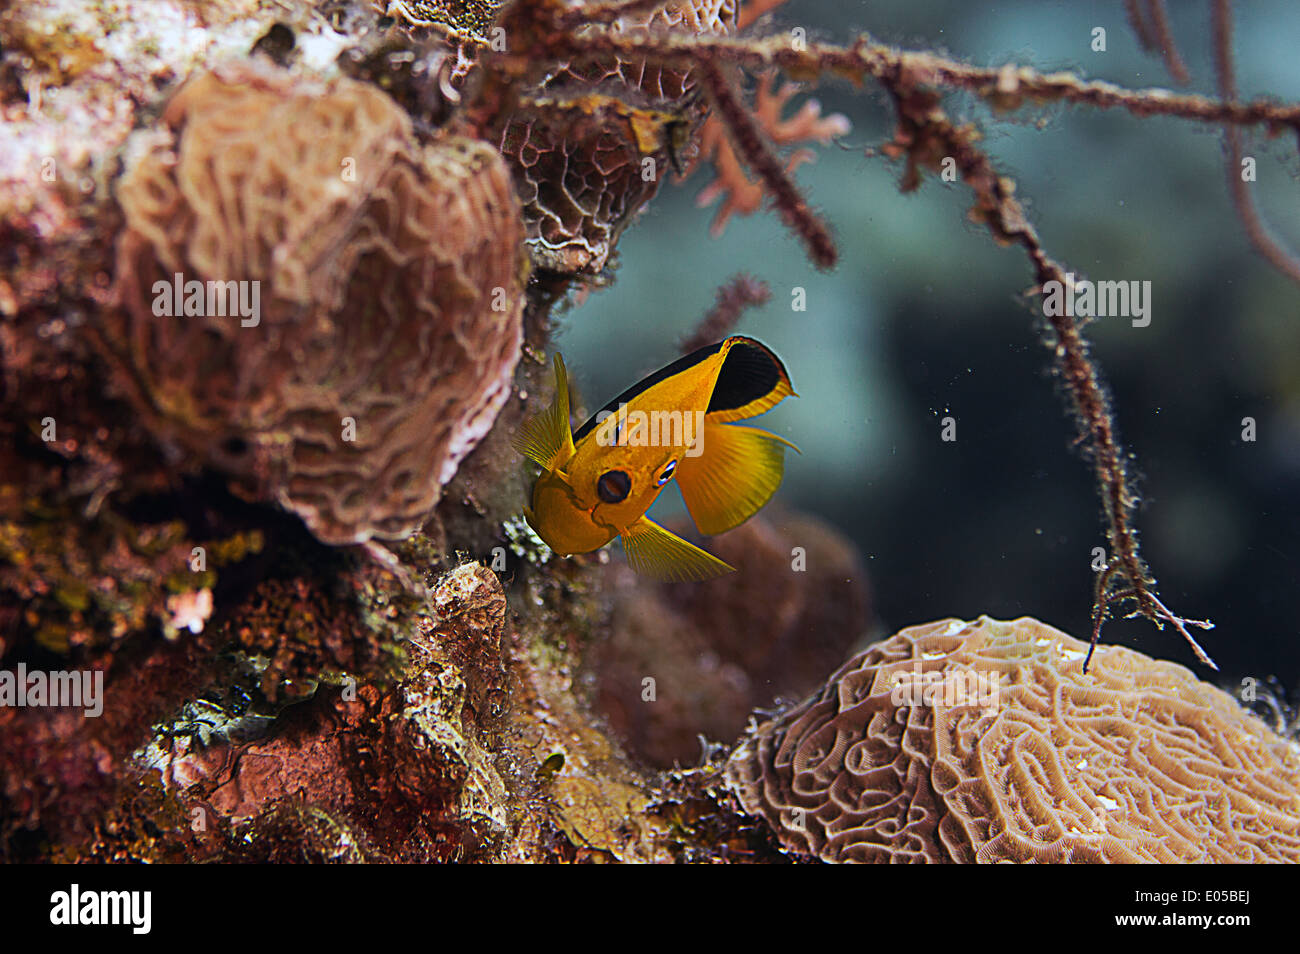 A Rock Beauty fish amongst the reef in Roatan, Honduras. Stock Photo